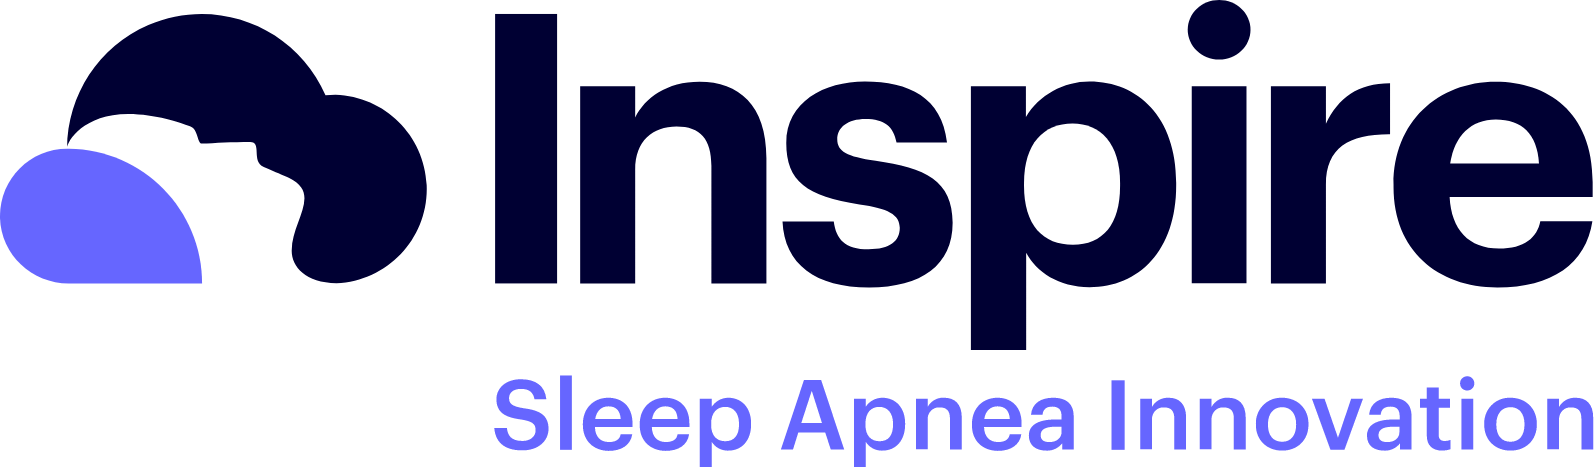 Inspire Medical Systems
 logo large (transparent PNG)